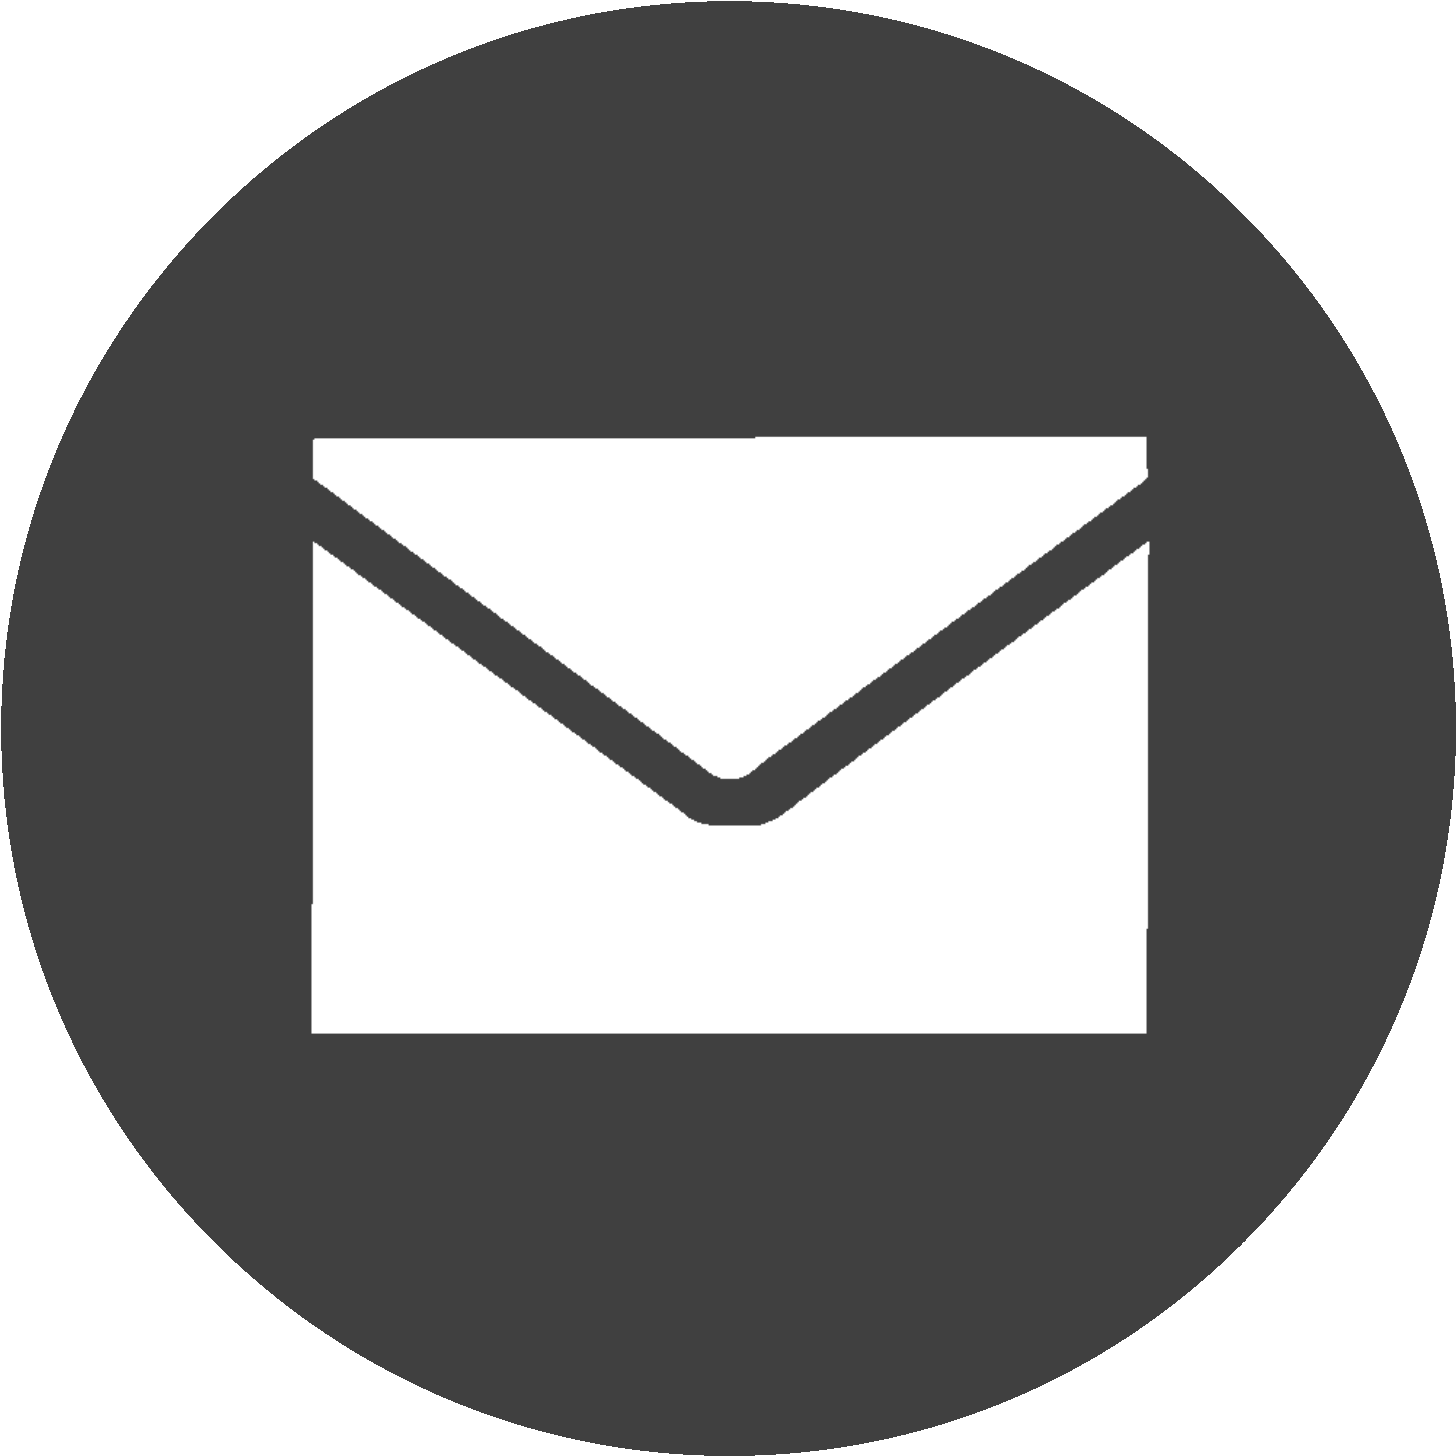 Значок gmail. Иконка gmail PNG. Значок почты gmail без фона. Gmail логотип круглый. Gmail 01